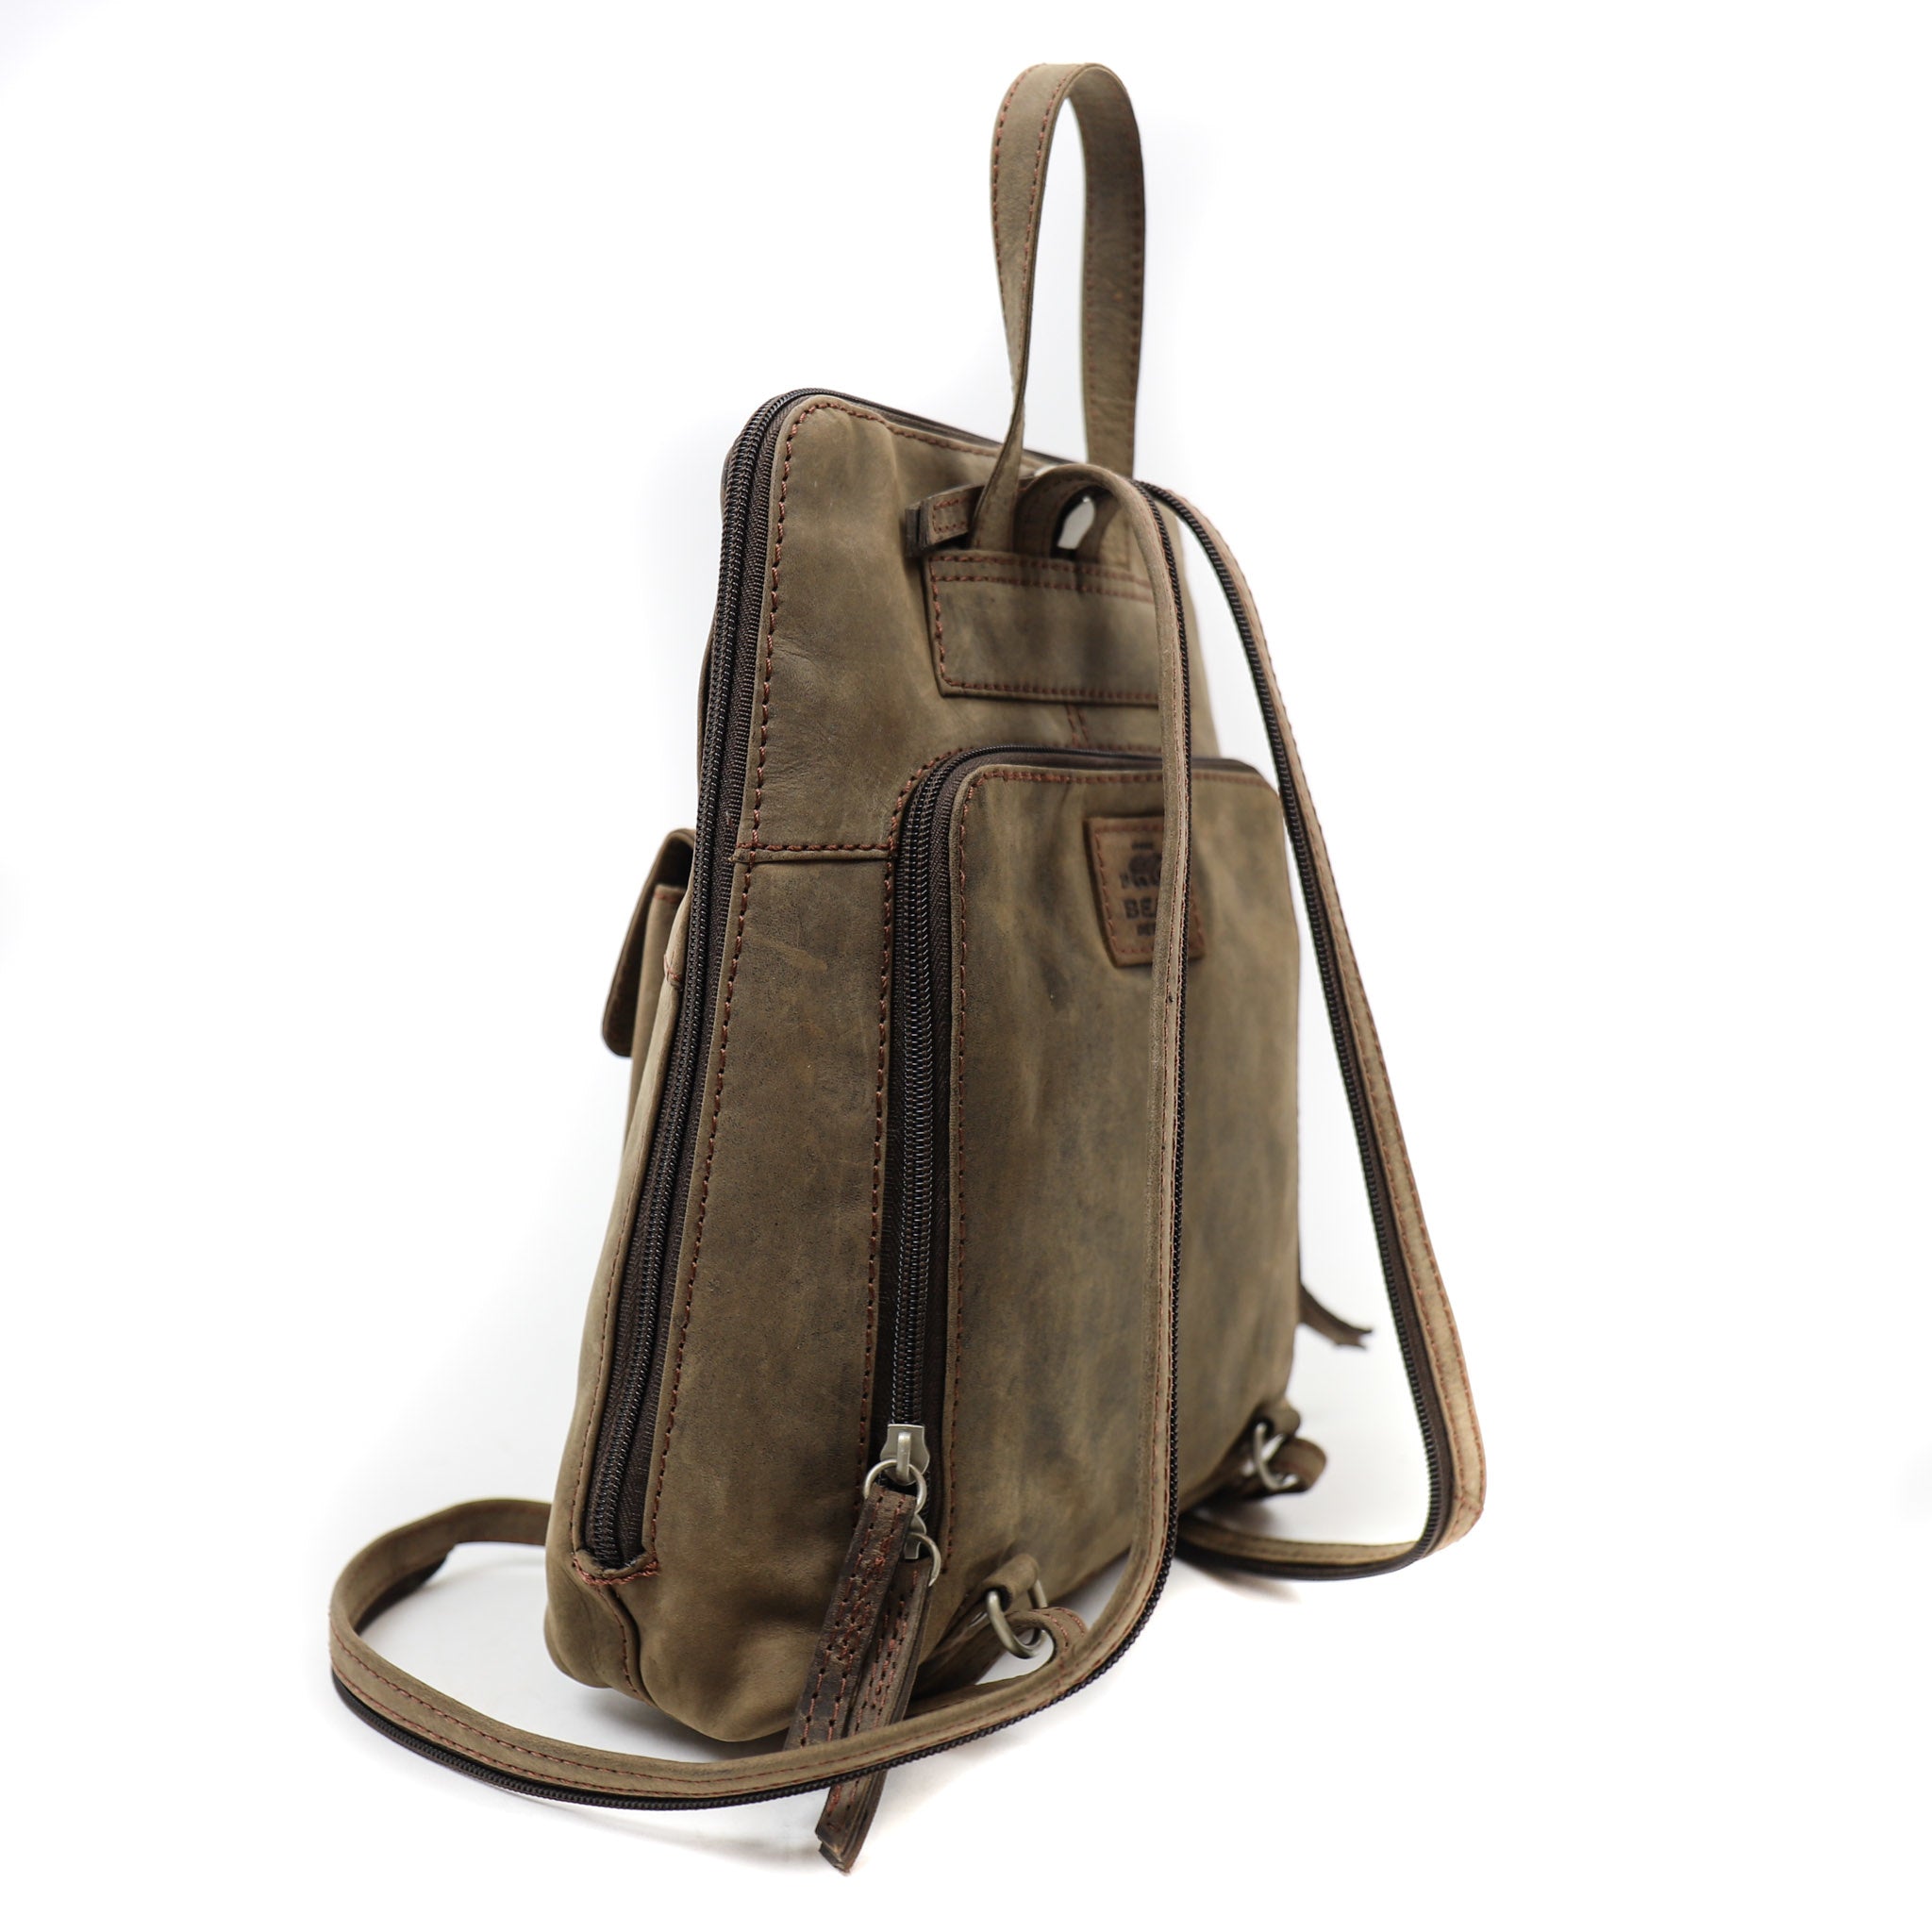 Backpack 'Barbara' brown - HD 6265